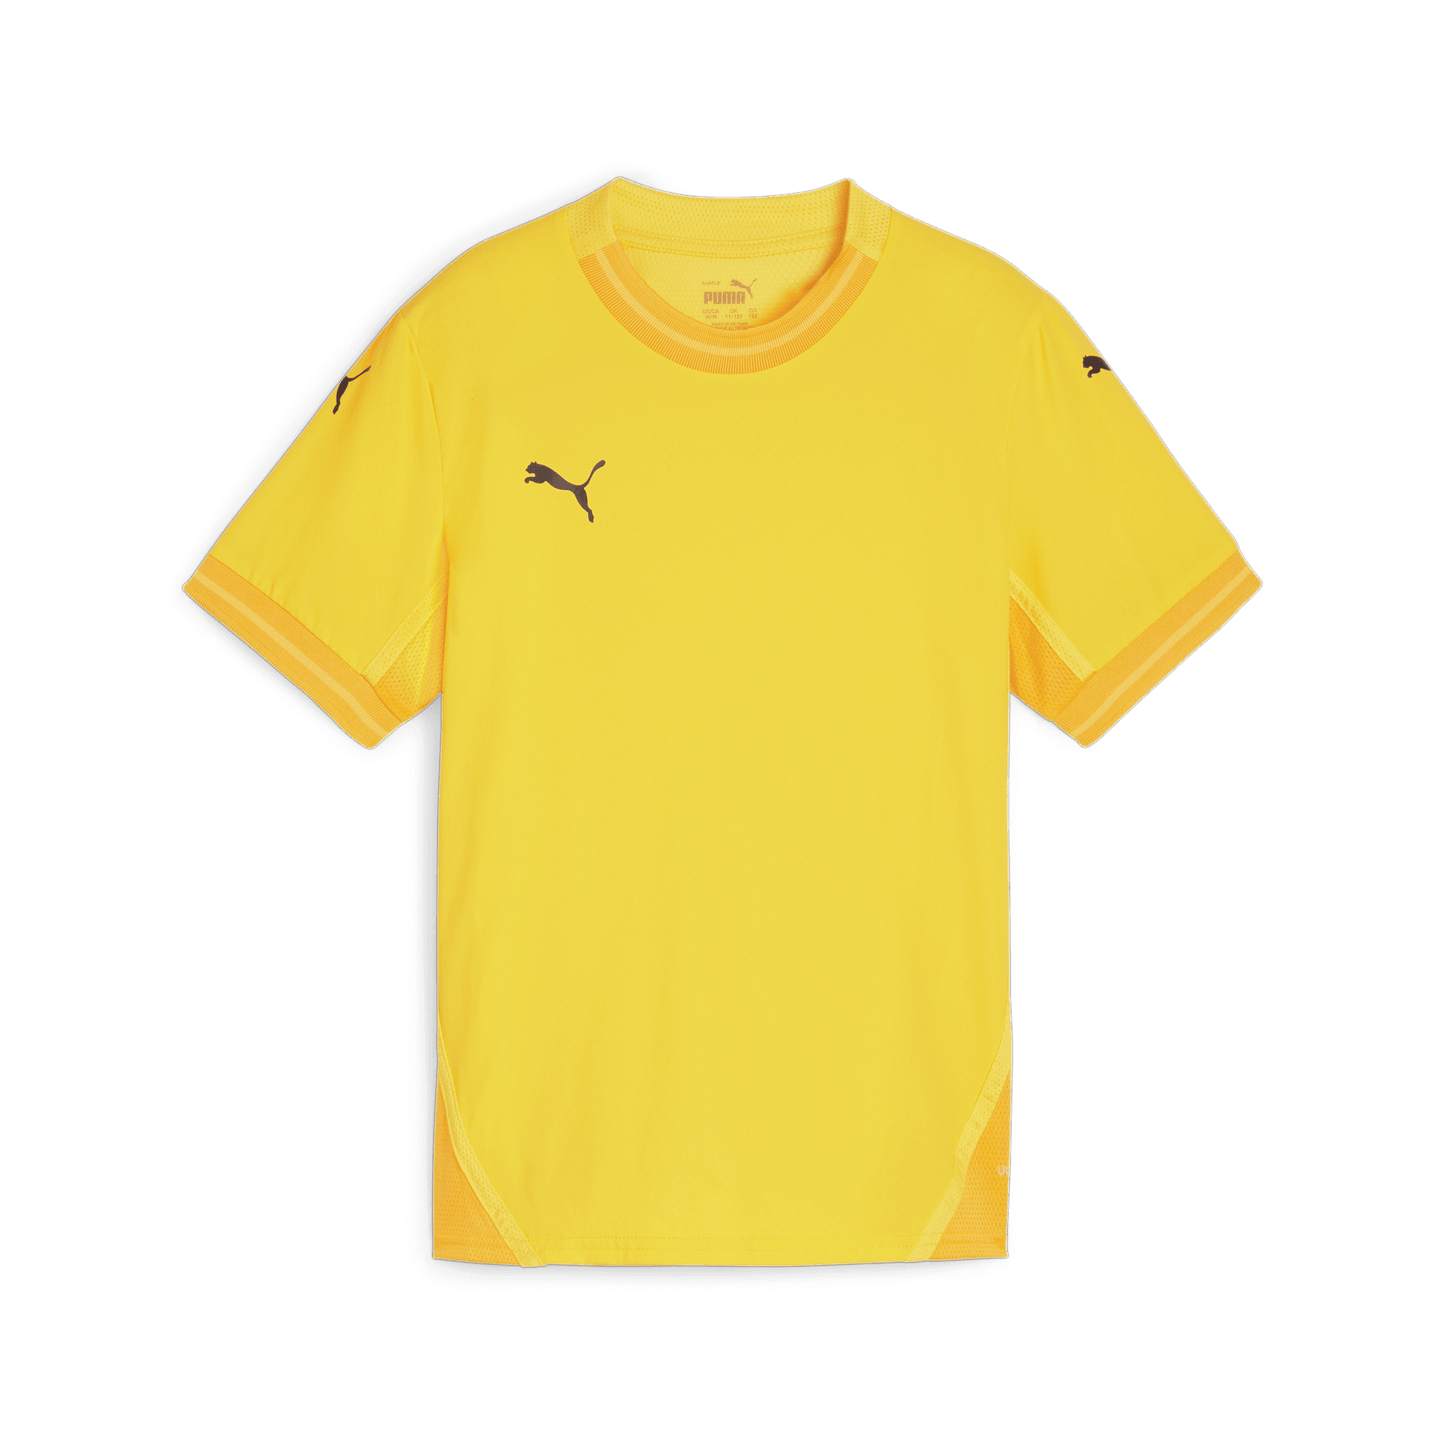 Jersey Faster Yellow-Puma Black-Sport Yellow (Front)